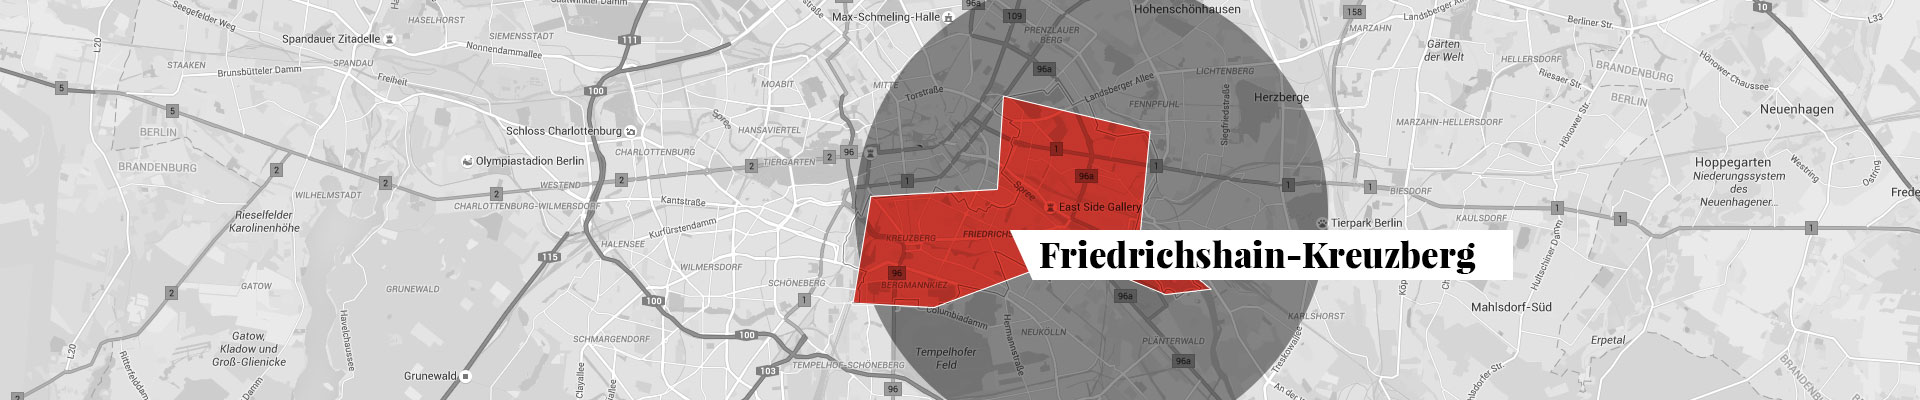 Friedrichshain-Kreuzberg map